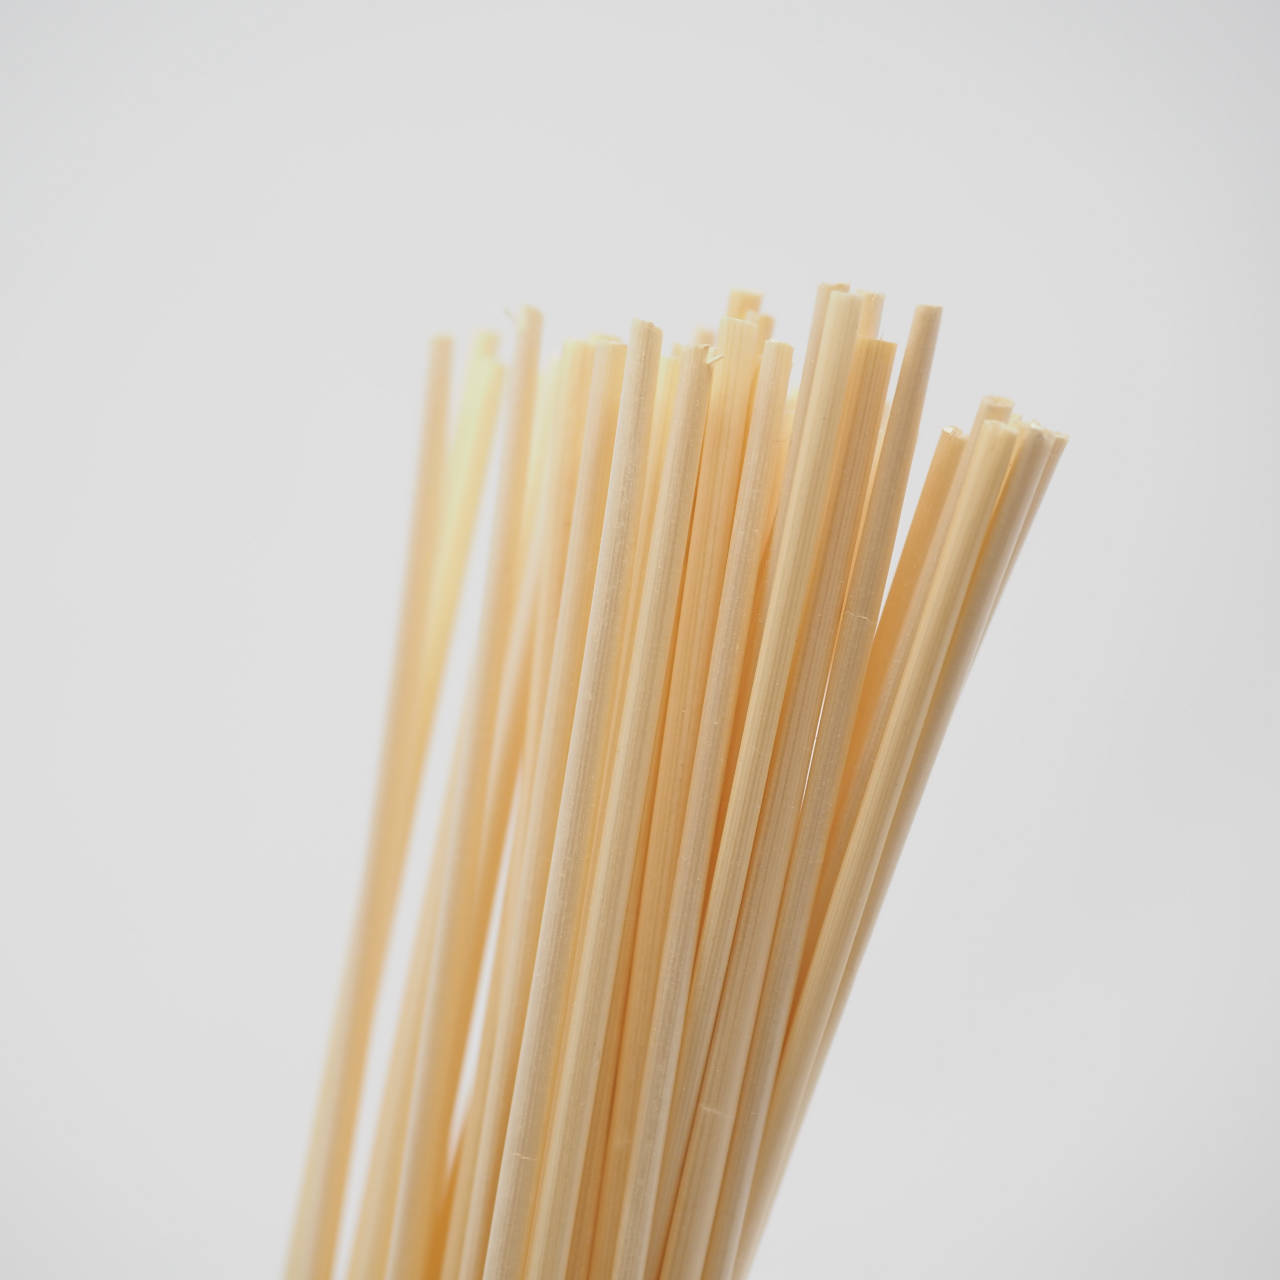 HIMMELI straw material 藁のみ（ヒンメリ用むぎ藁）